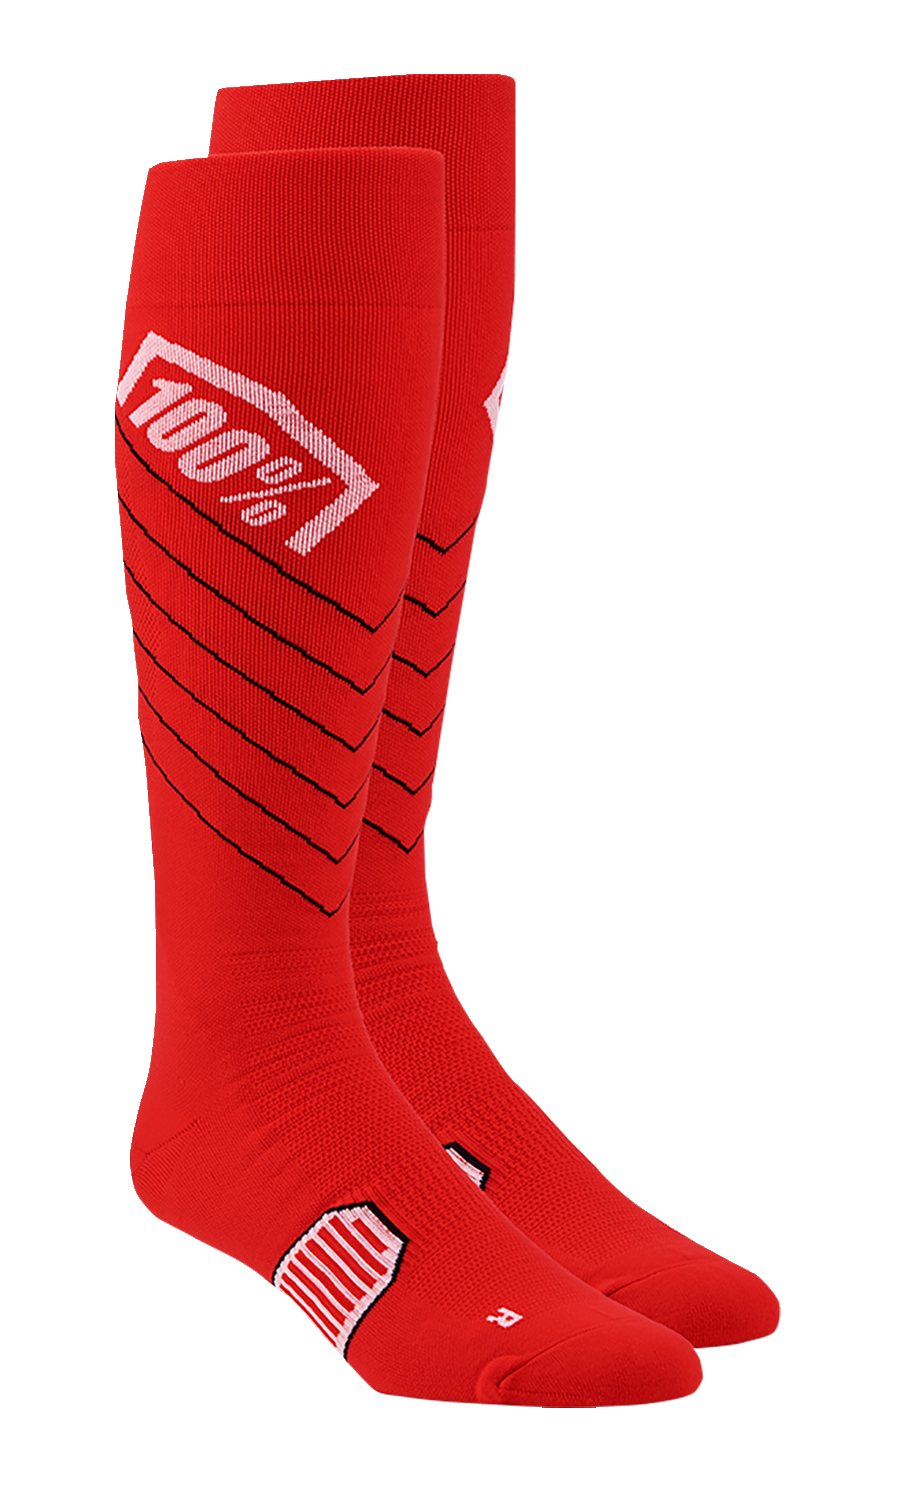 100% Hi-Side Performance Socks - Red - Large/XL 20054-00008